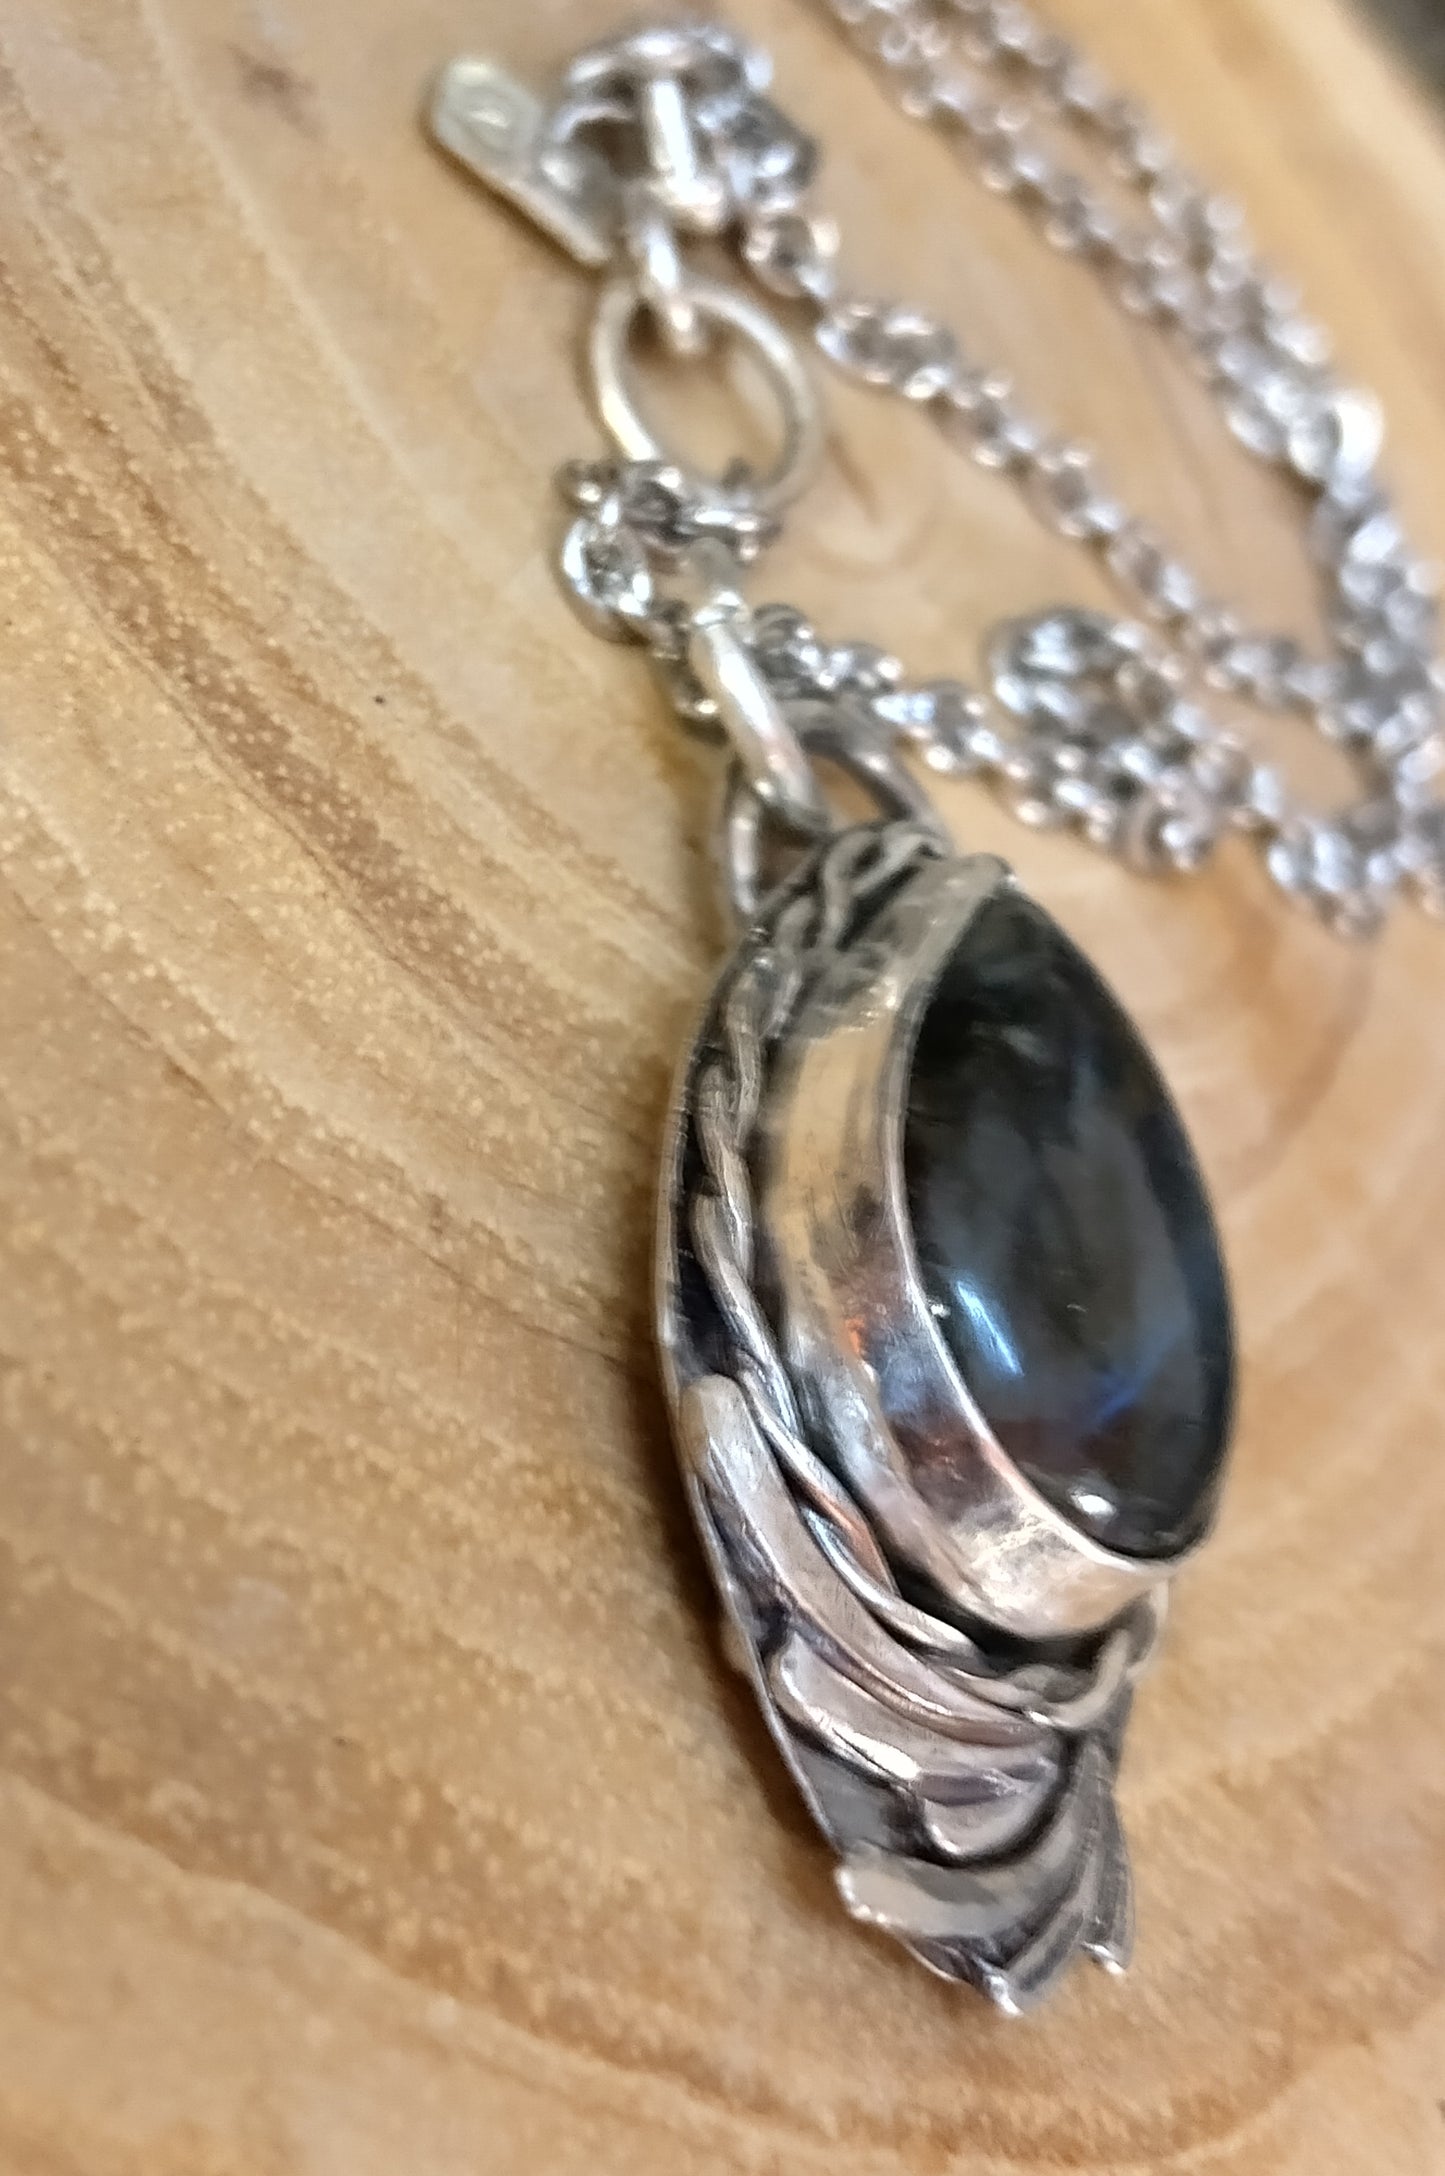 Labradorite set in Silver Pendant Necklace.